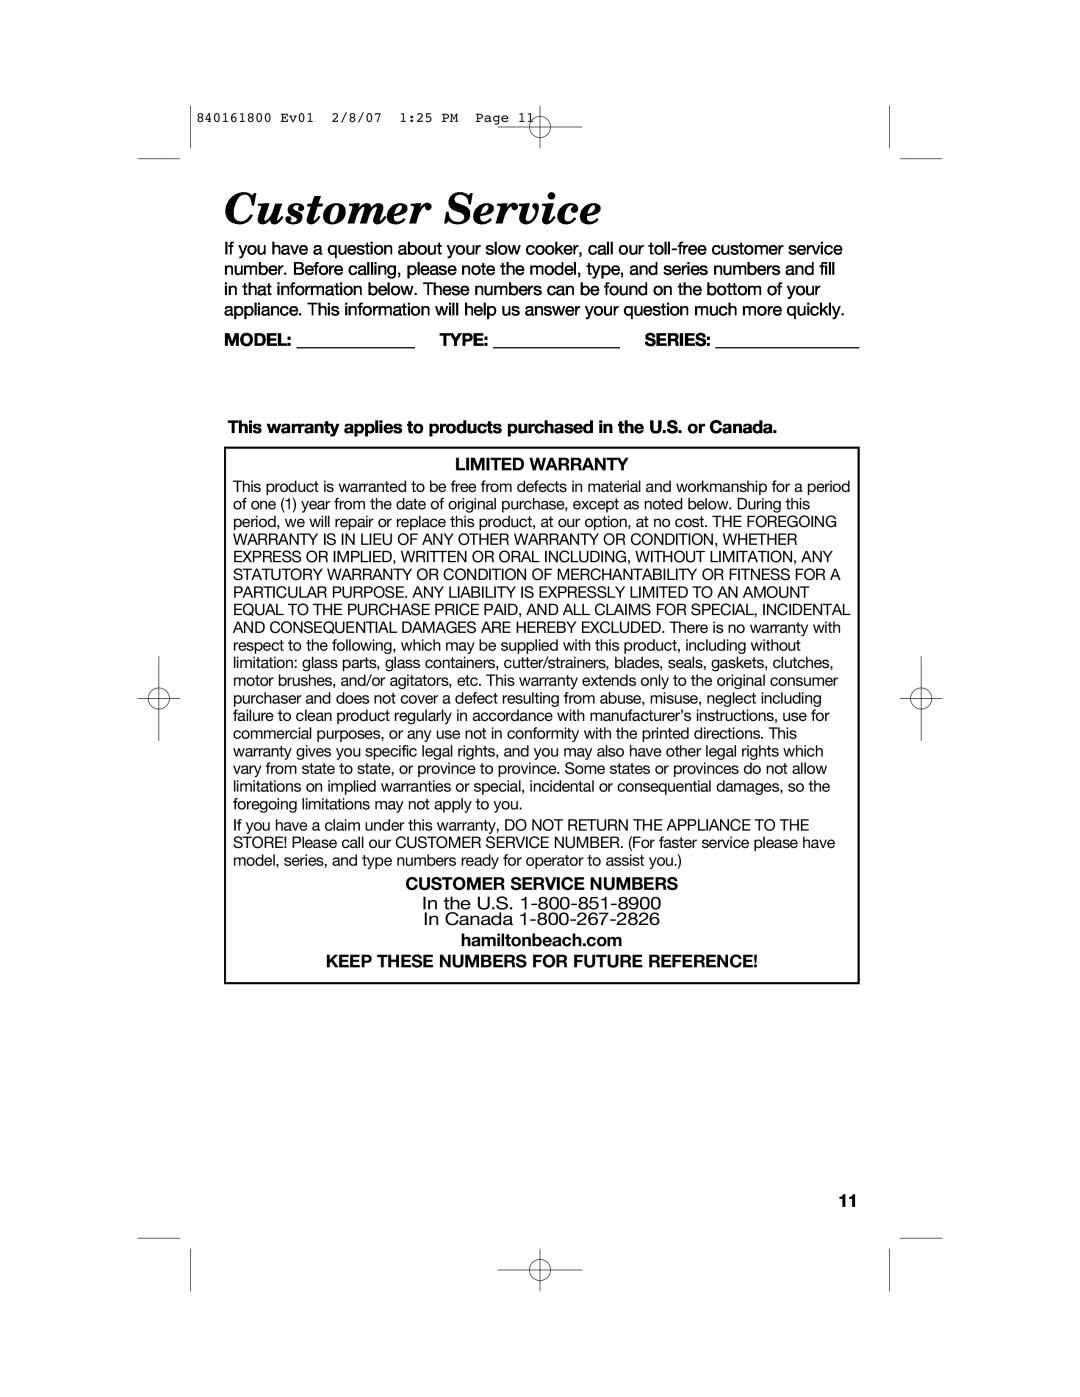 Hamilton Beach 840161800 manual Model Type Series, Limited Warranty, Customer Service Numbers 